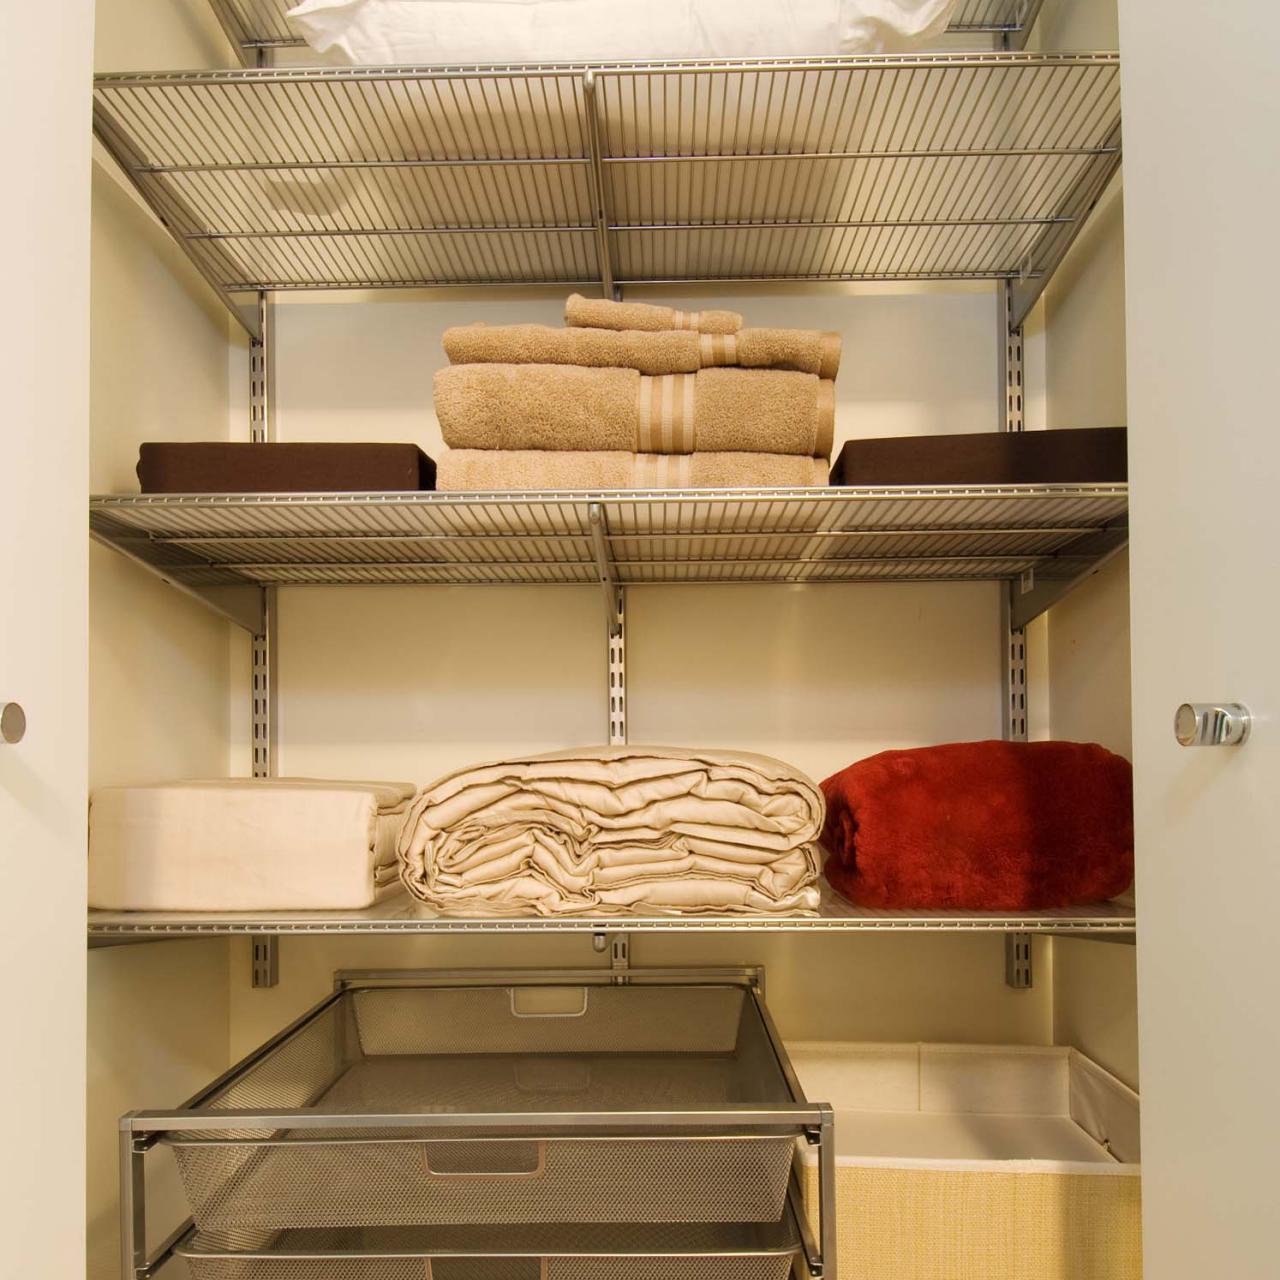 Organizing Your Linen Closet